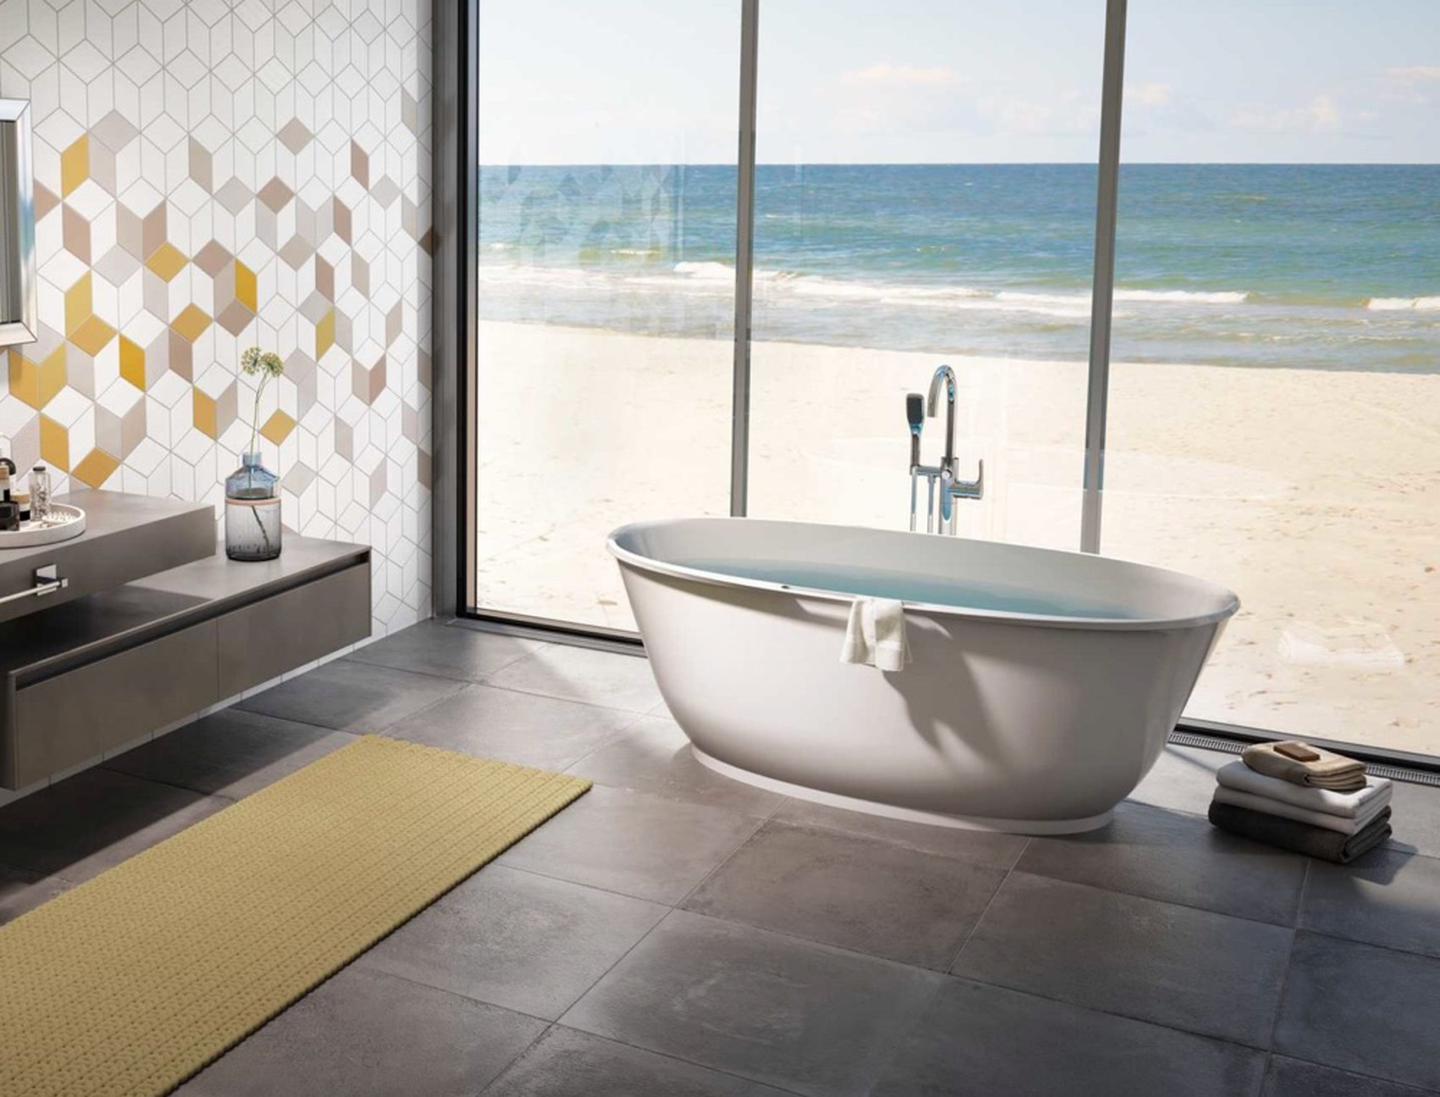 free-standing bath tub by windows looking onto beach